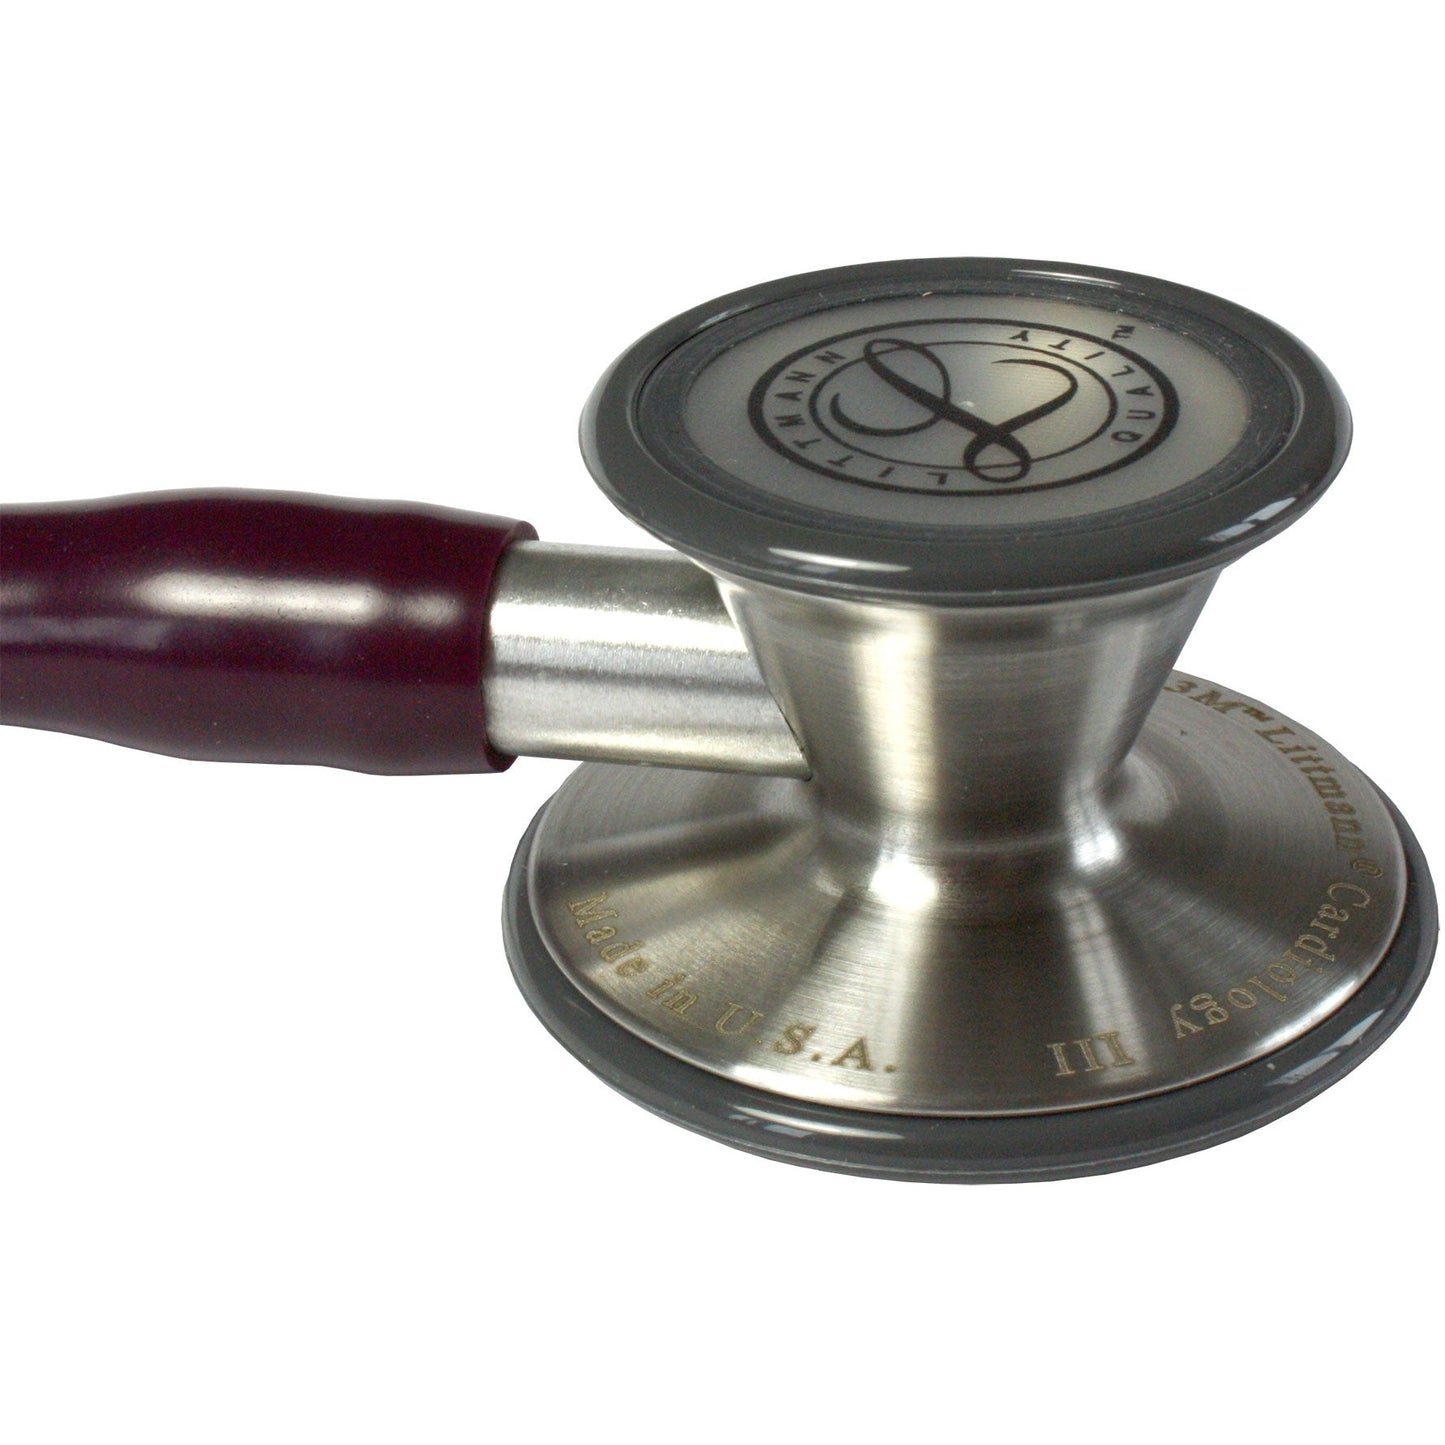 Littmann Cardiology III Stethoscope: Plum 3135